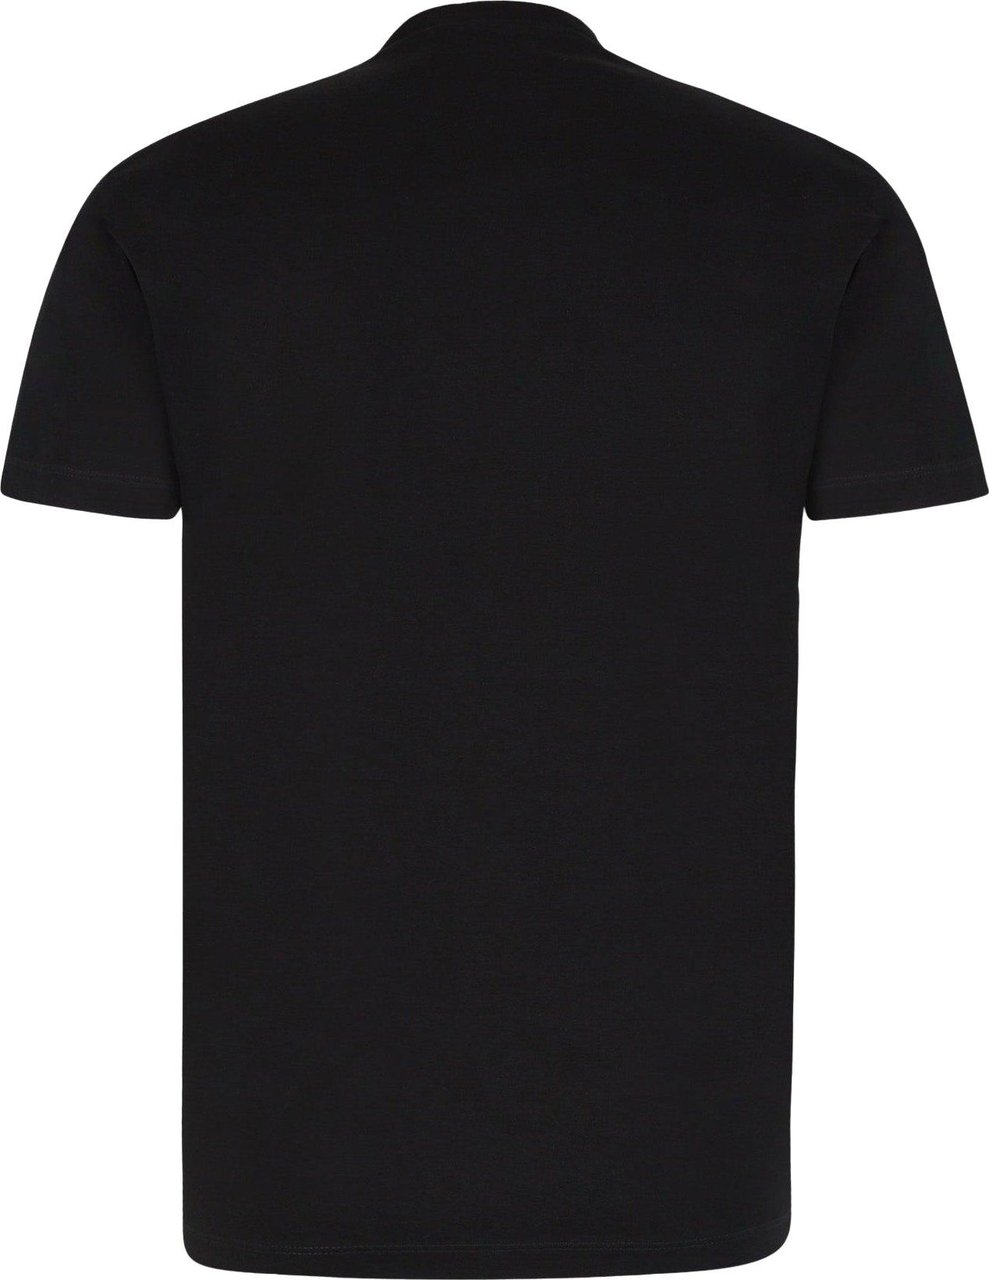 Dsquared2 t-shirt black Zwart